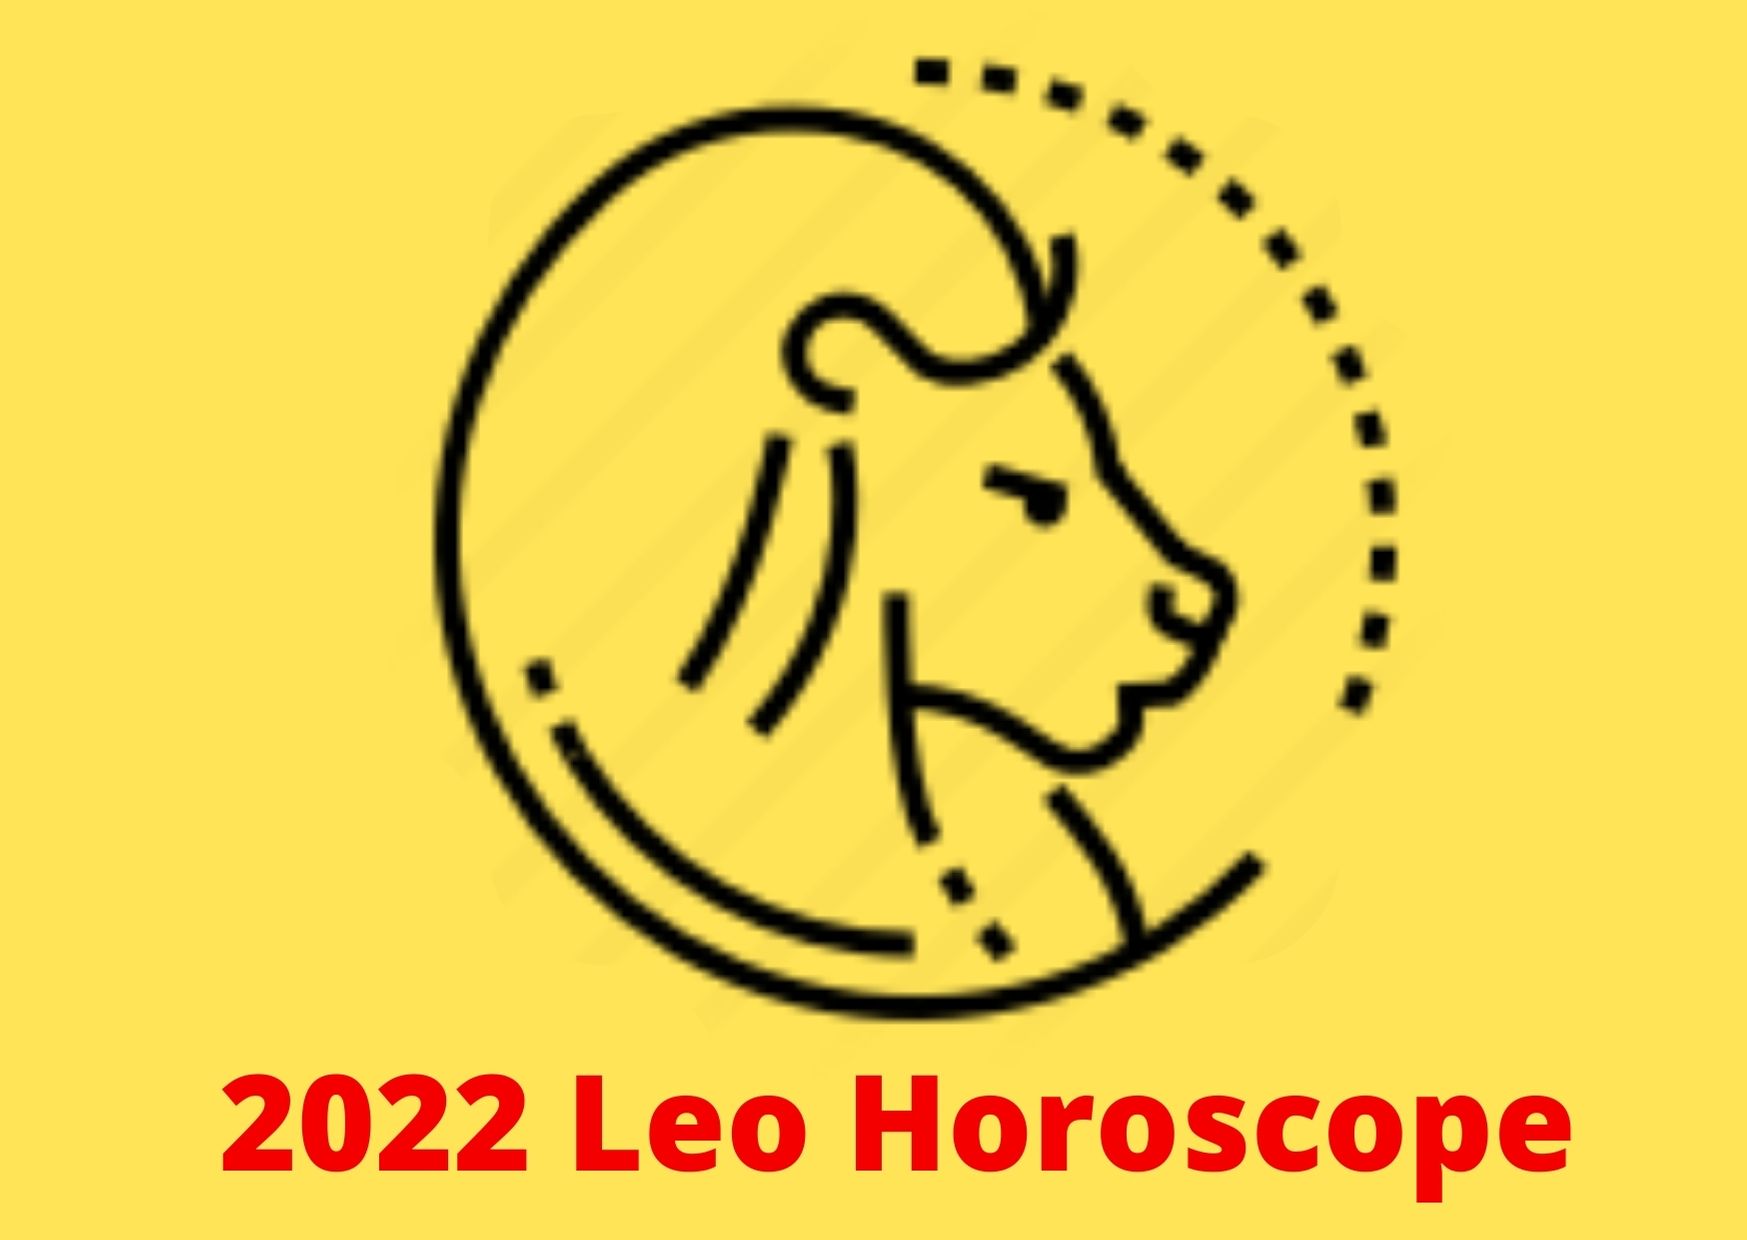 2022 Leo Horoscope yearly predictions